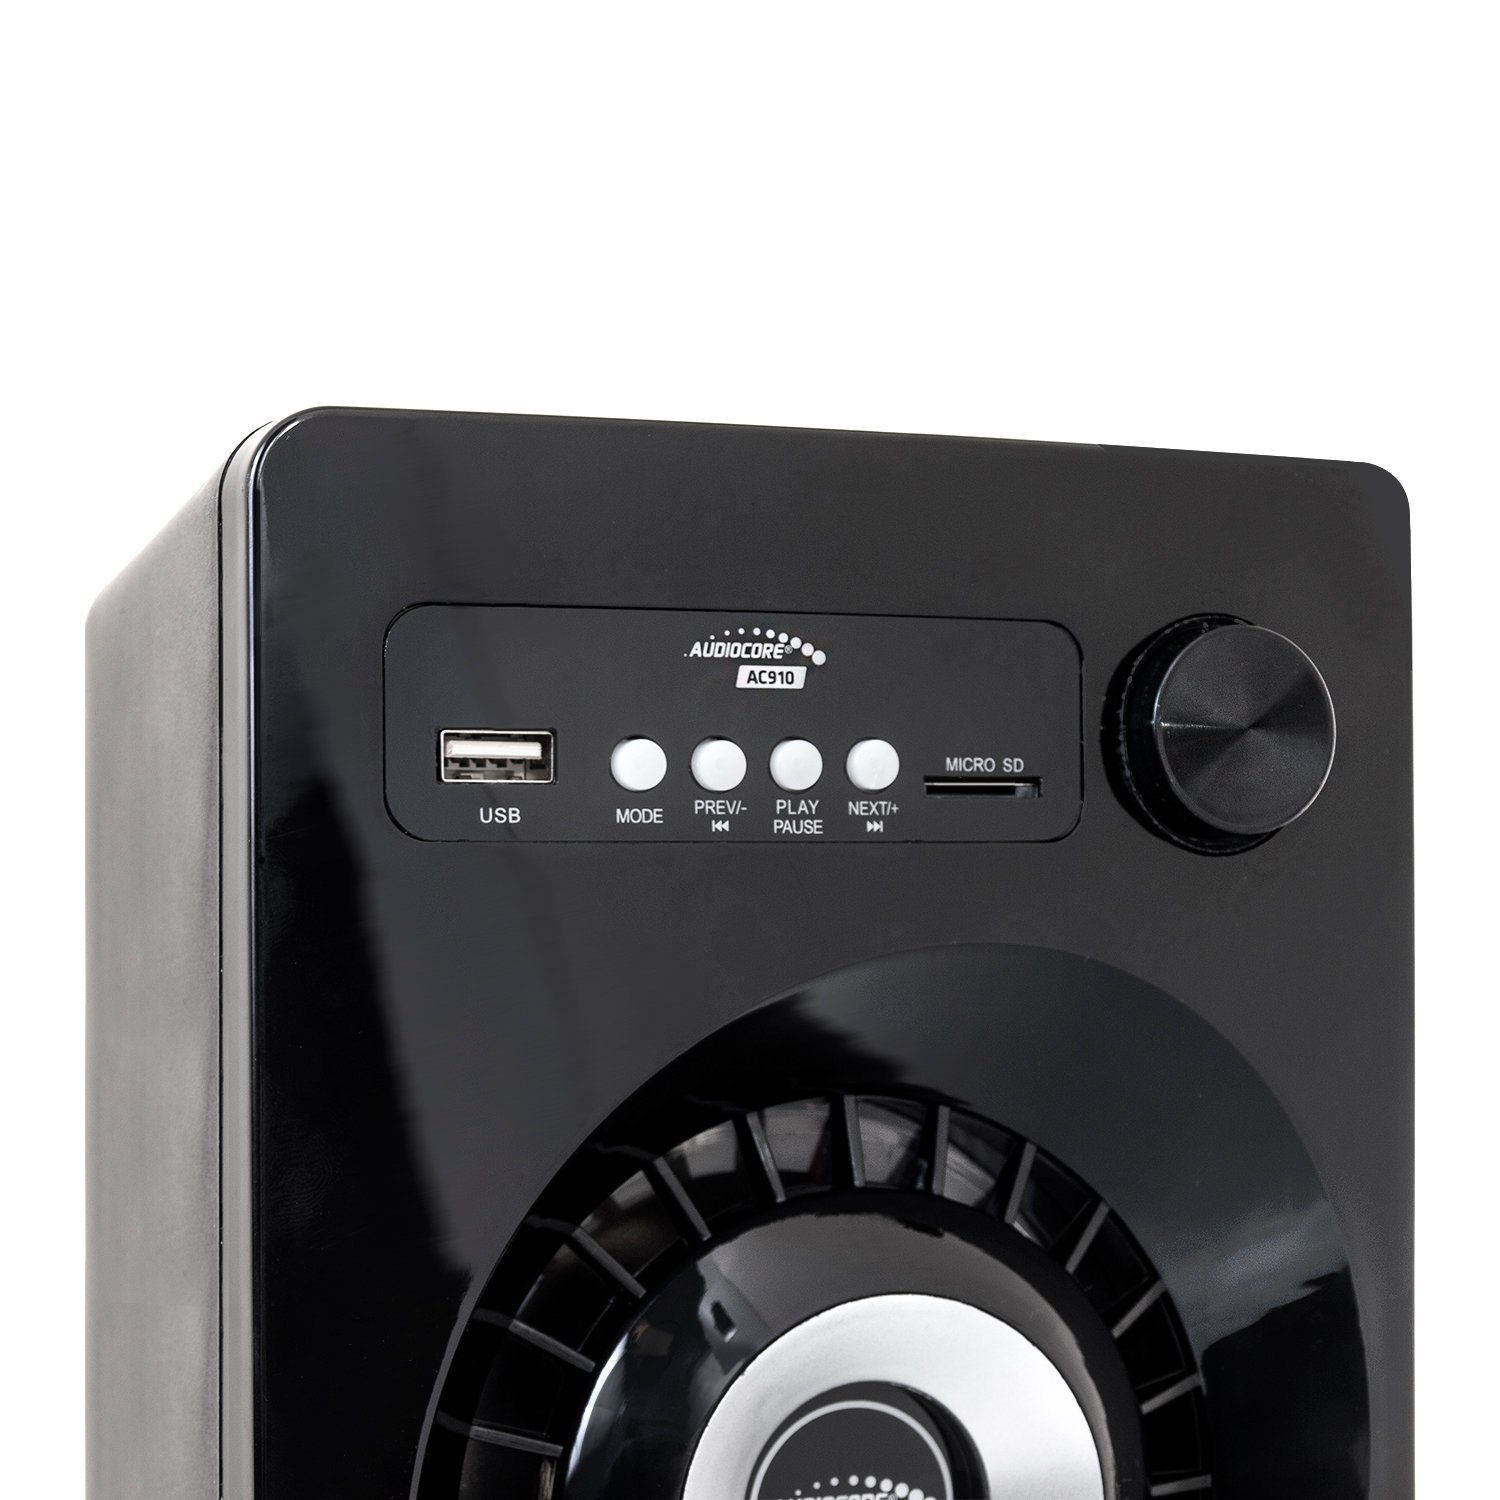 USB, W, AC910 55 AUX, 2.1 Audiocore Fernbedienung) SD, Lautsprechersystem UKW-Radio, inkl. (Bluetooth,